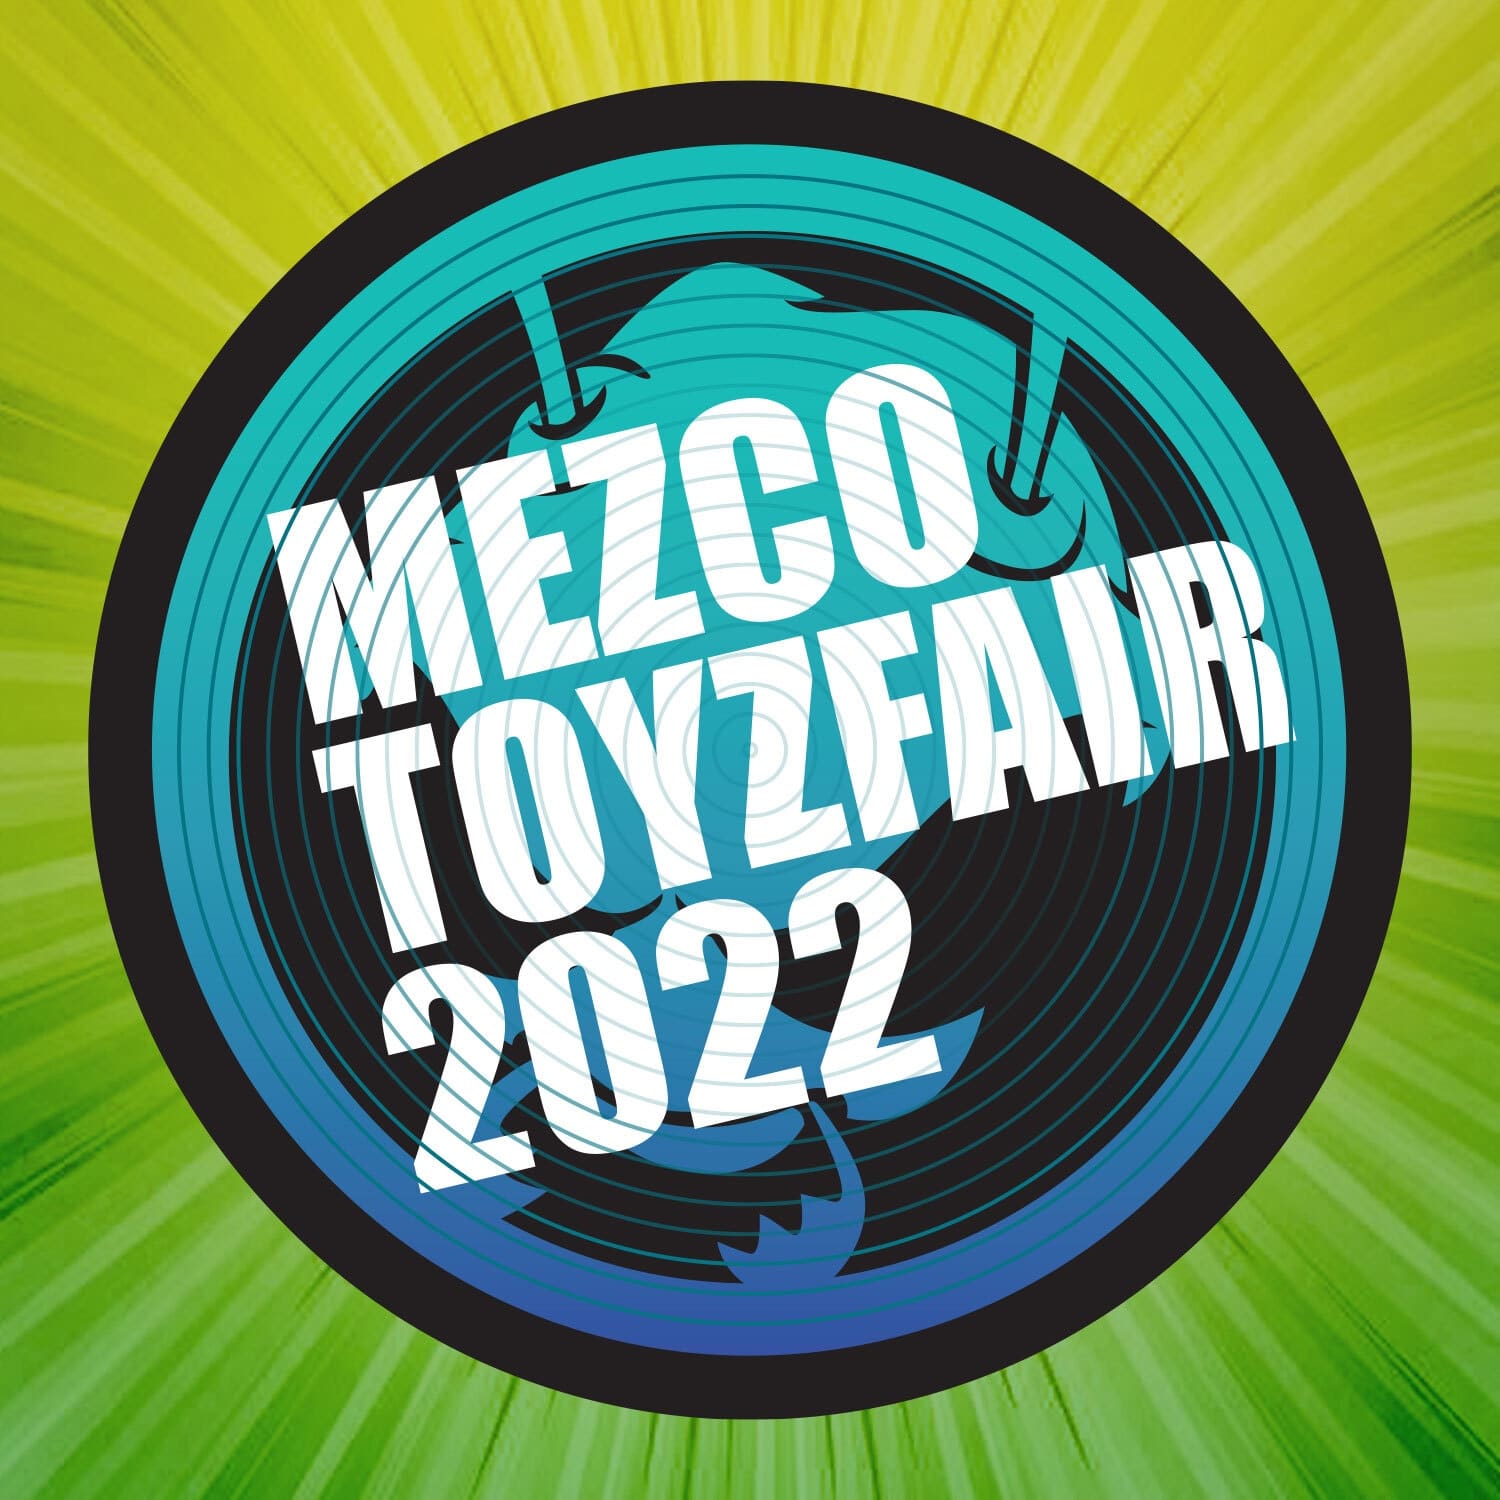 Mezco Toyz Toy Fair Day 3